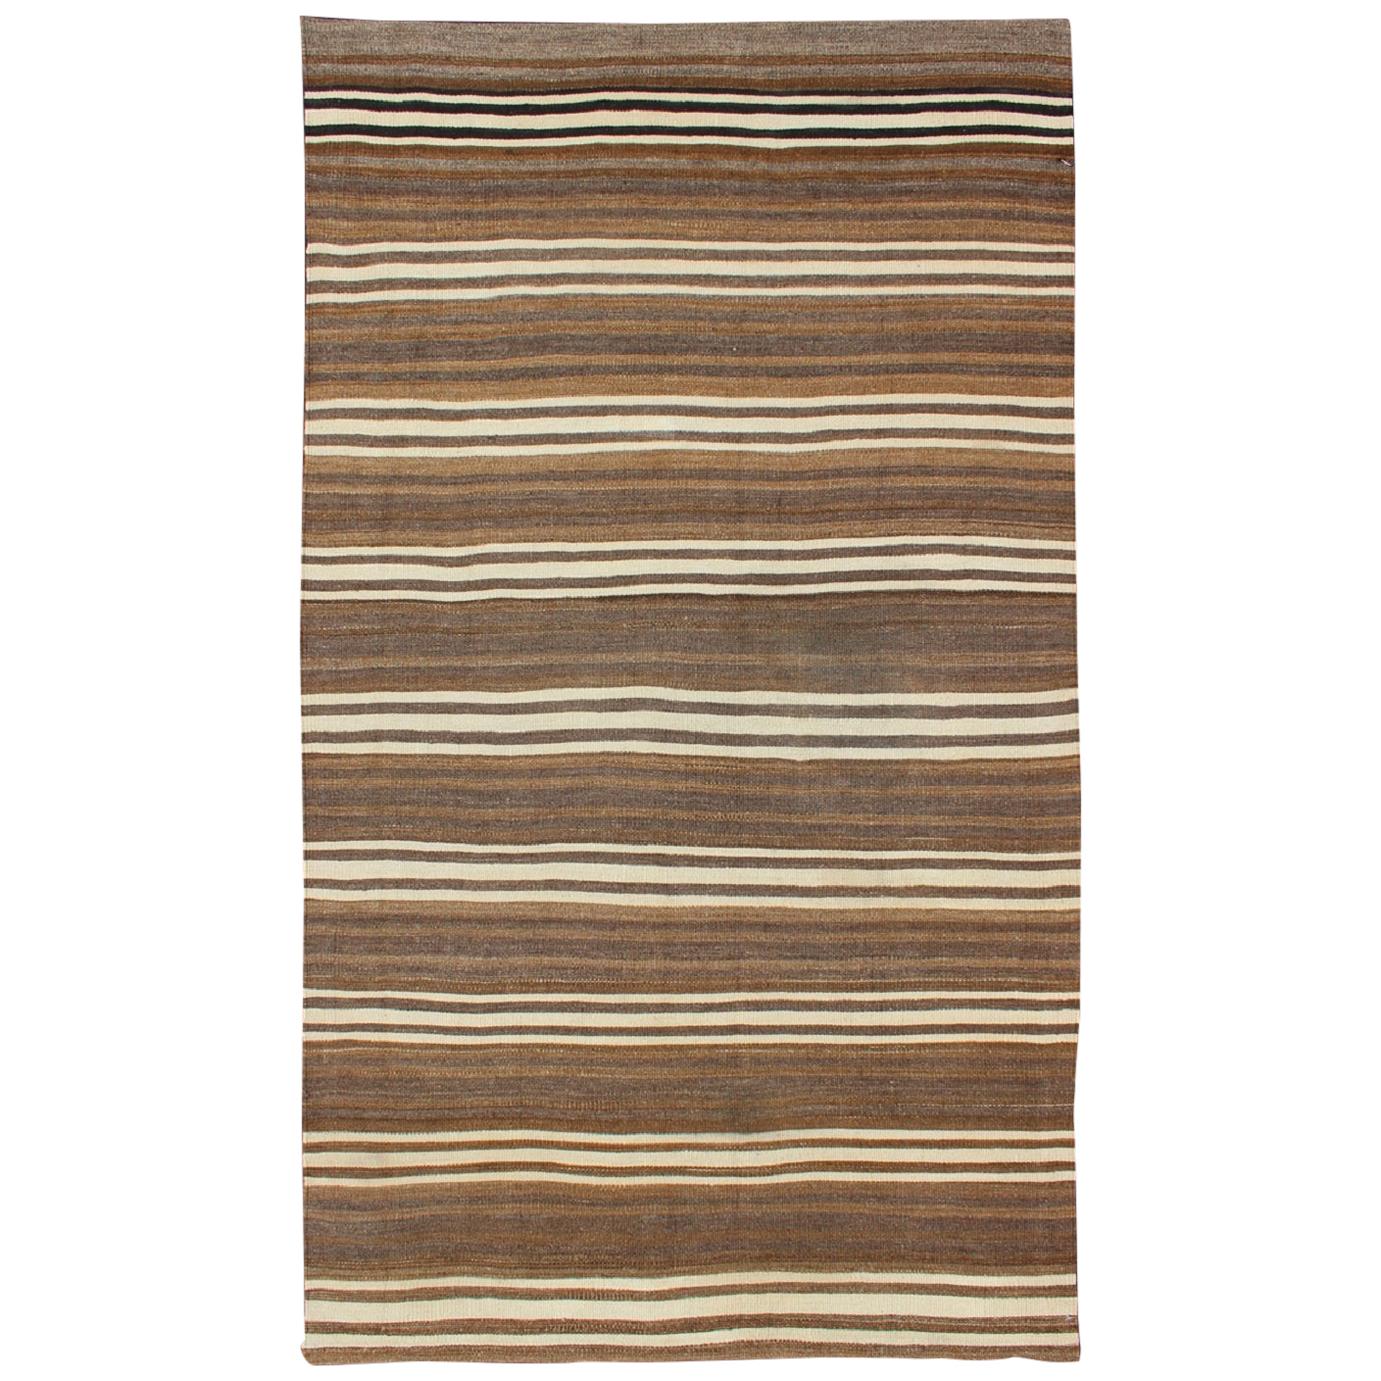 Striped Turkish Vintage Kilim Flat-Weave Rug in Brown's and Ivory